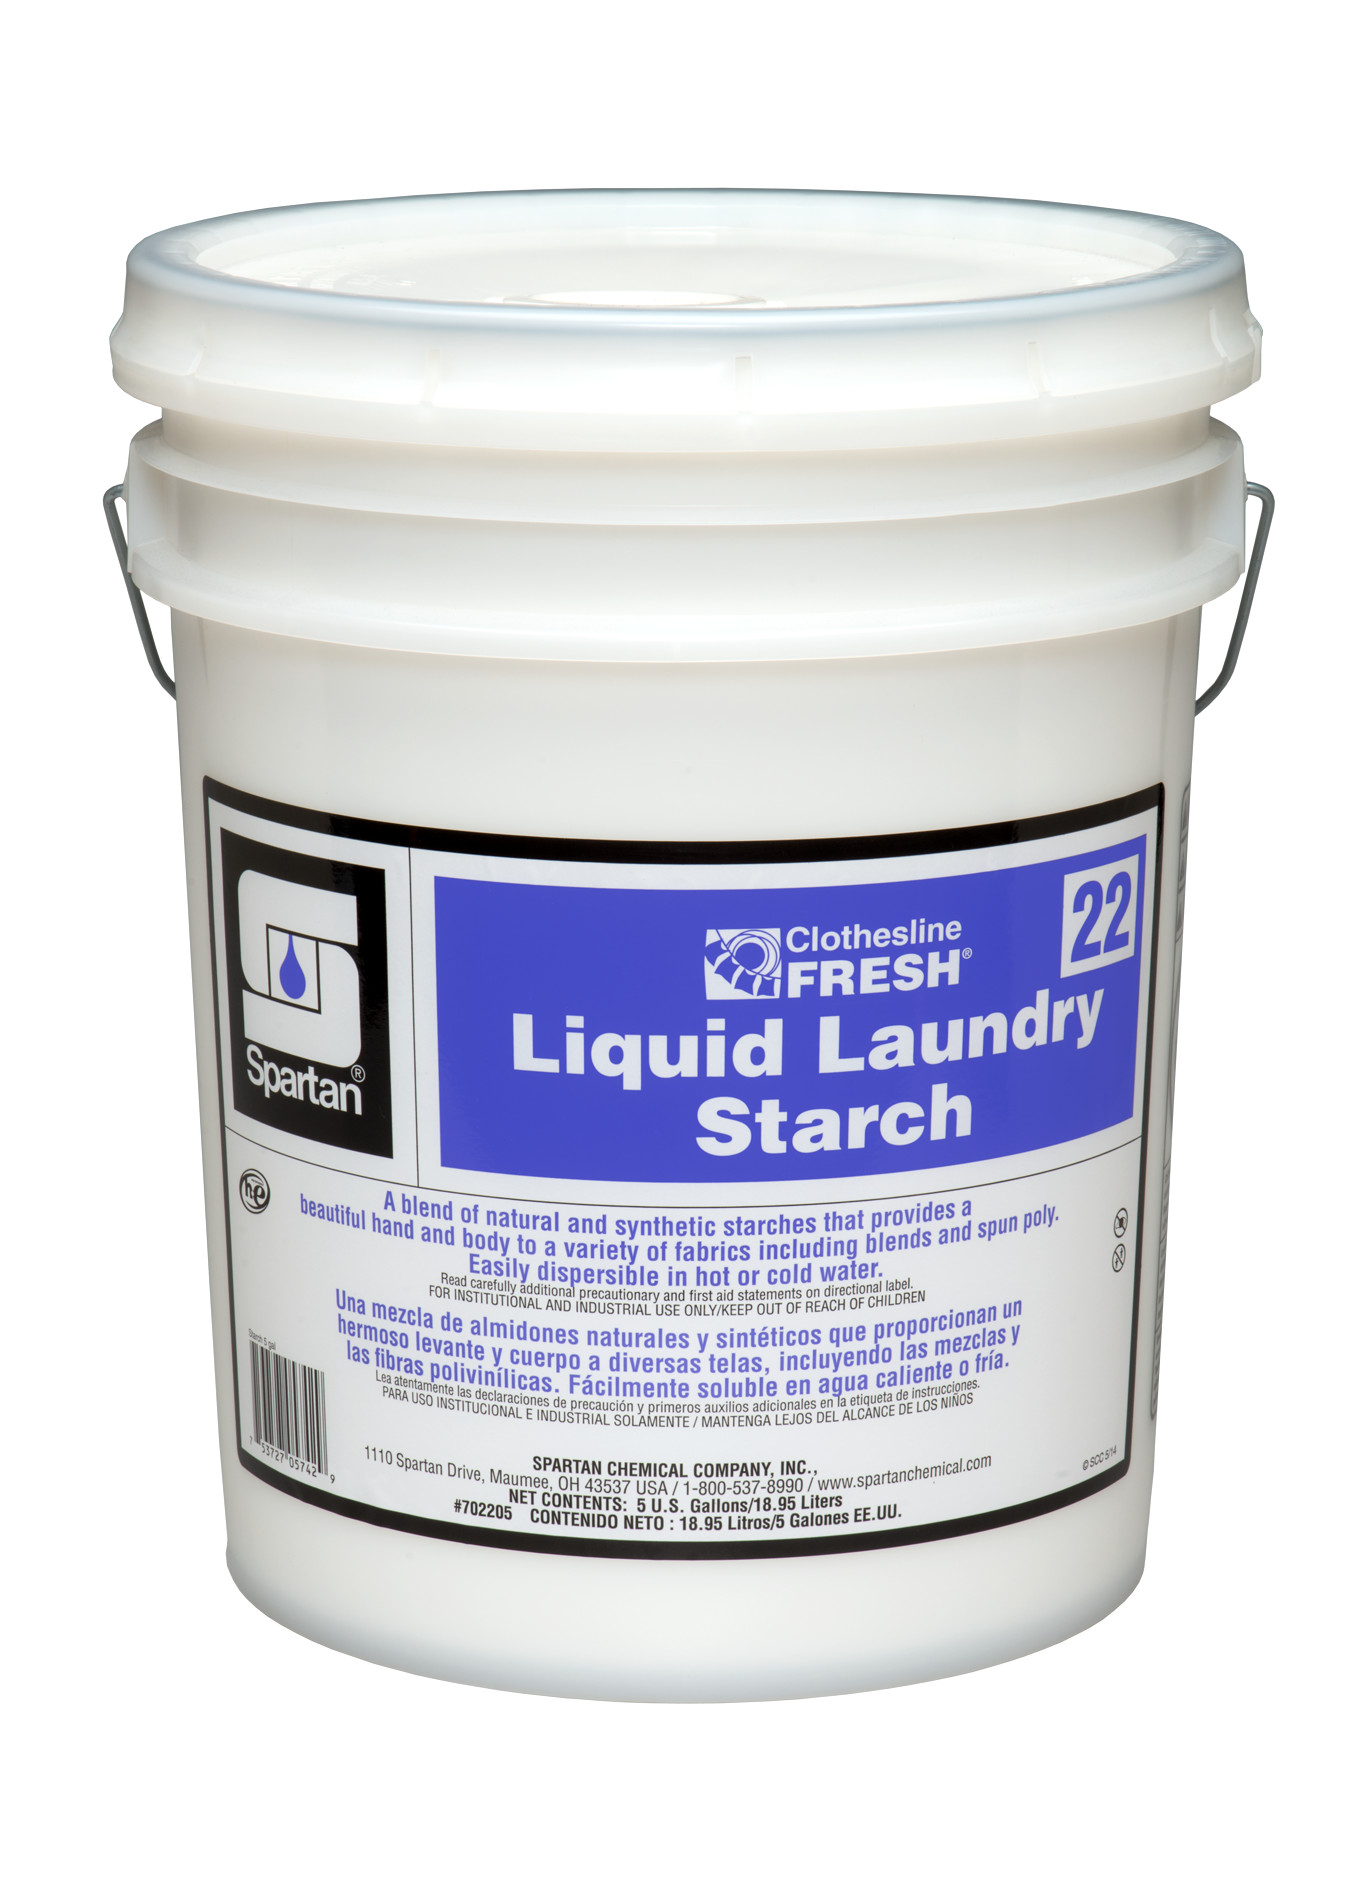 Spartan Chemical Company Clothesline Fresh Liquid Laundry Starch 22, 5 GAL PAIL